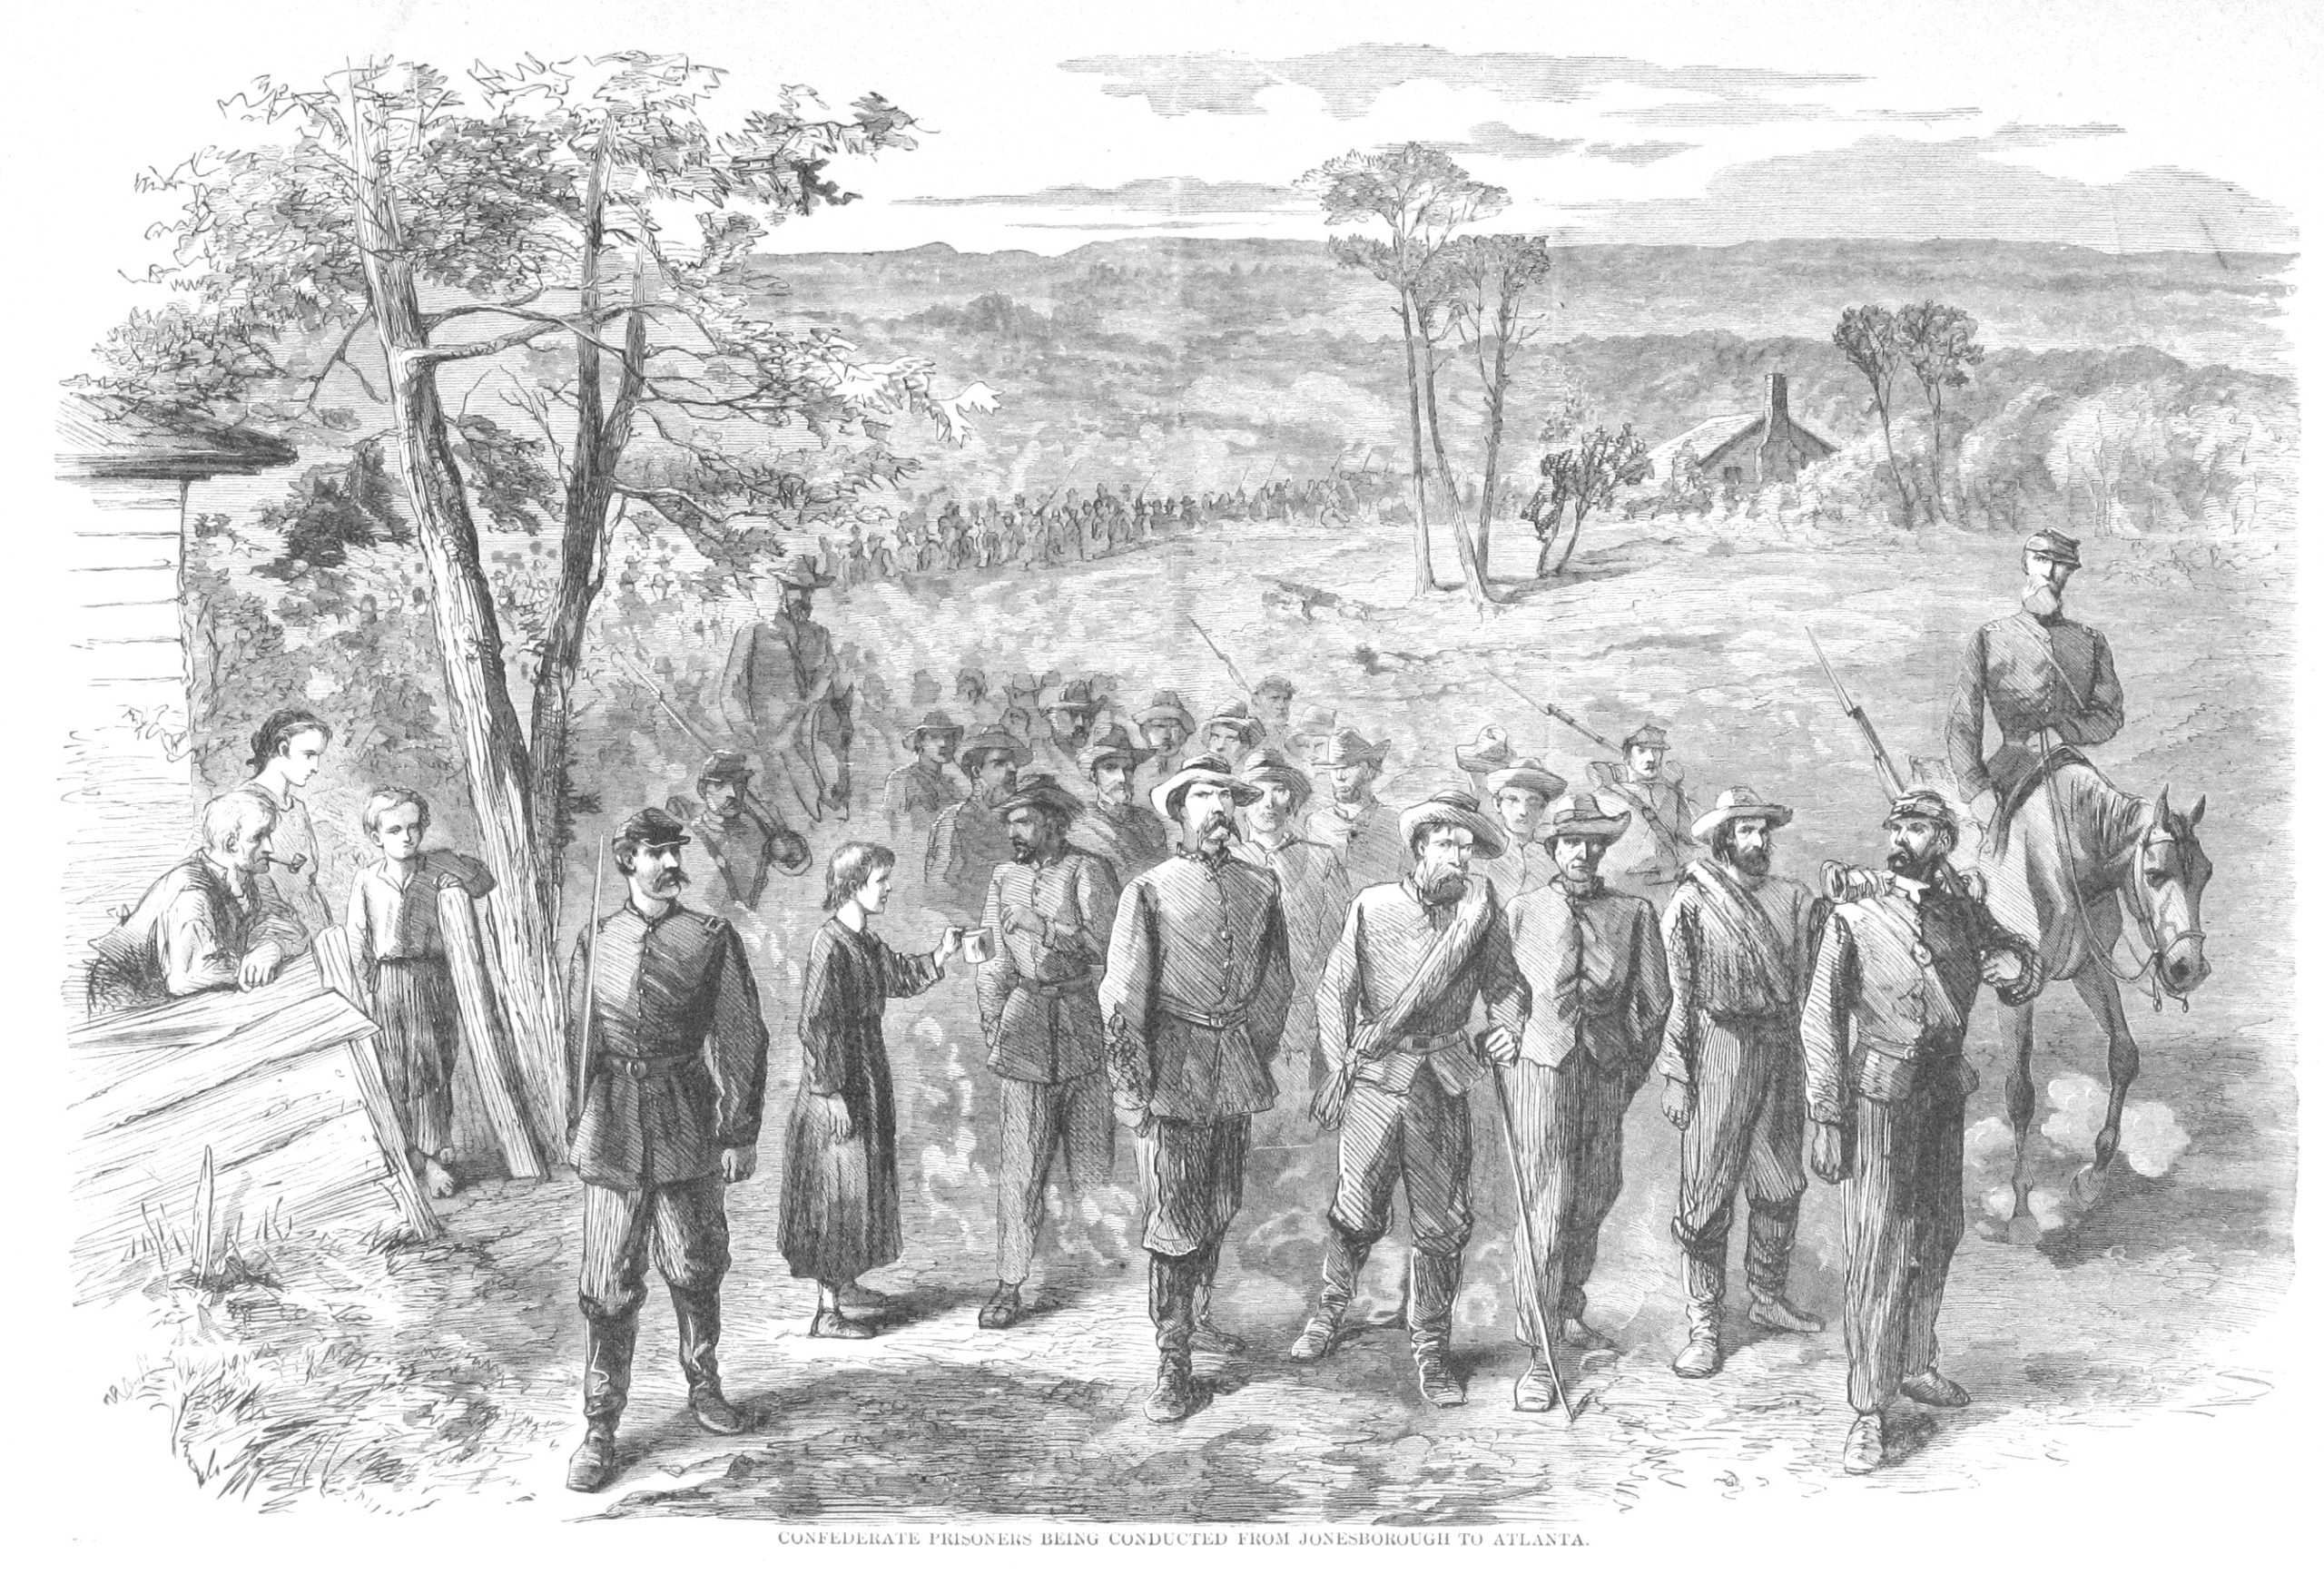 confederate prisoners jonesborough atlanta scaled